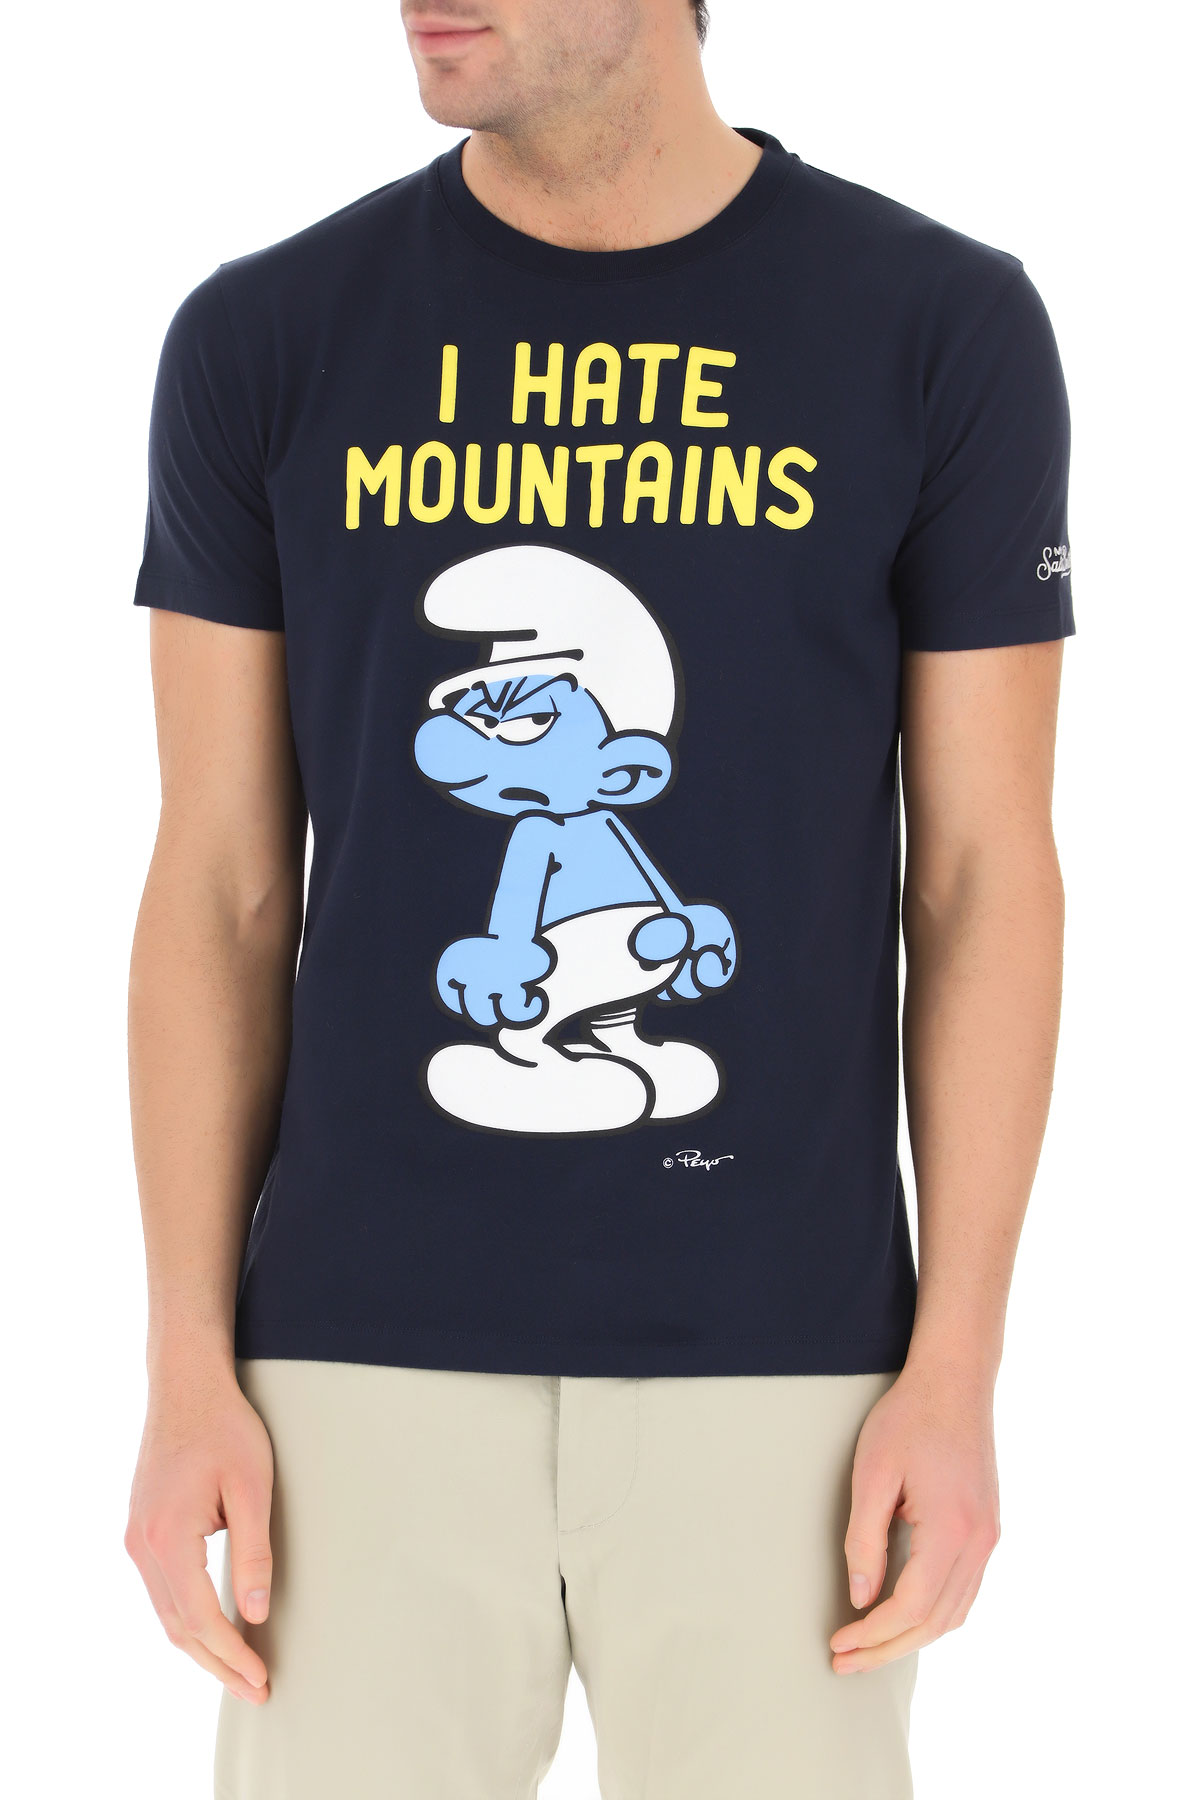 i hate mountains 2